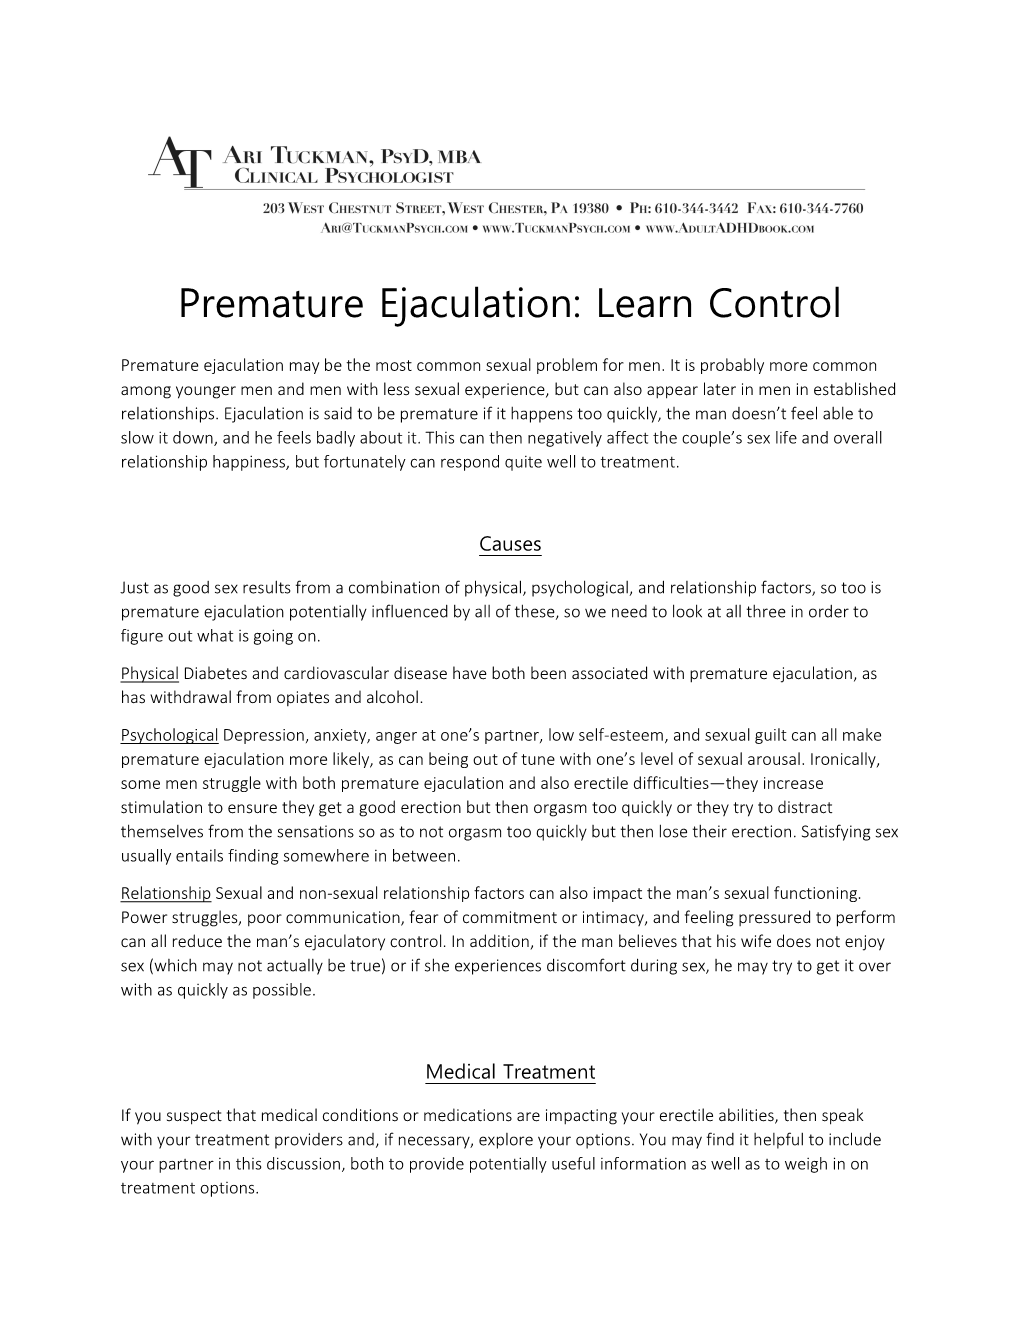 Premature Ejaculation: Learn Control